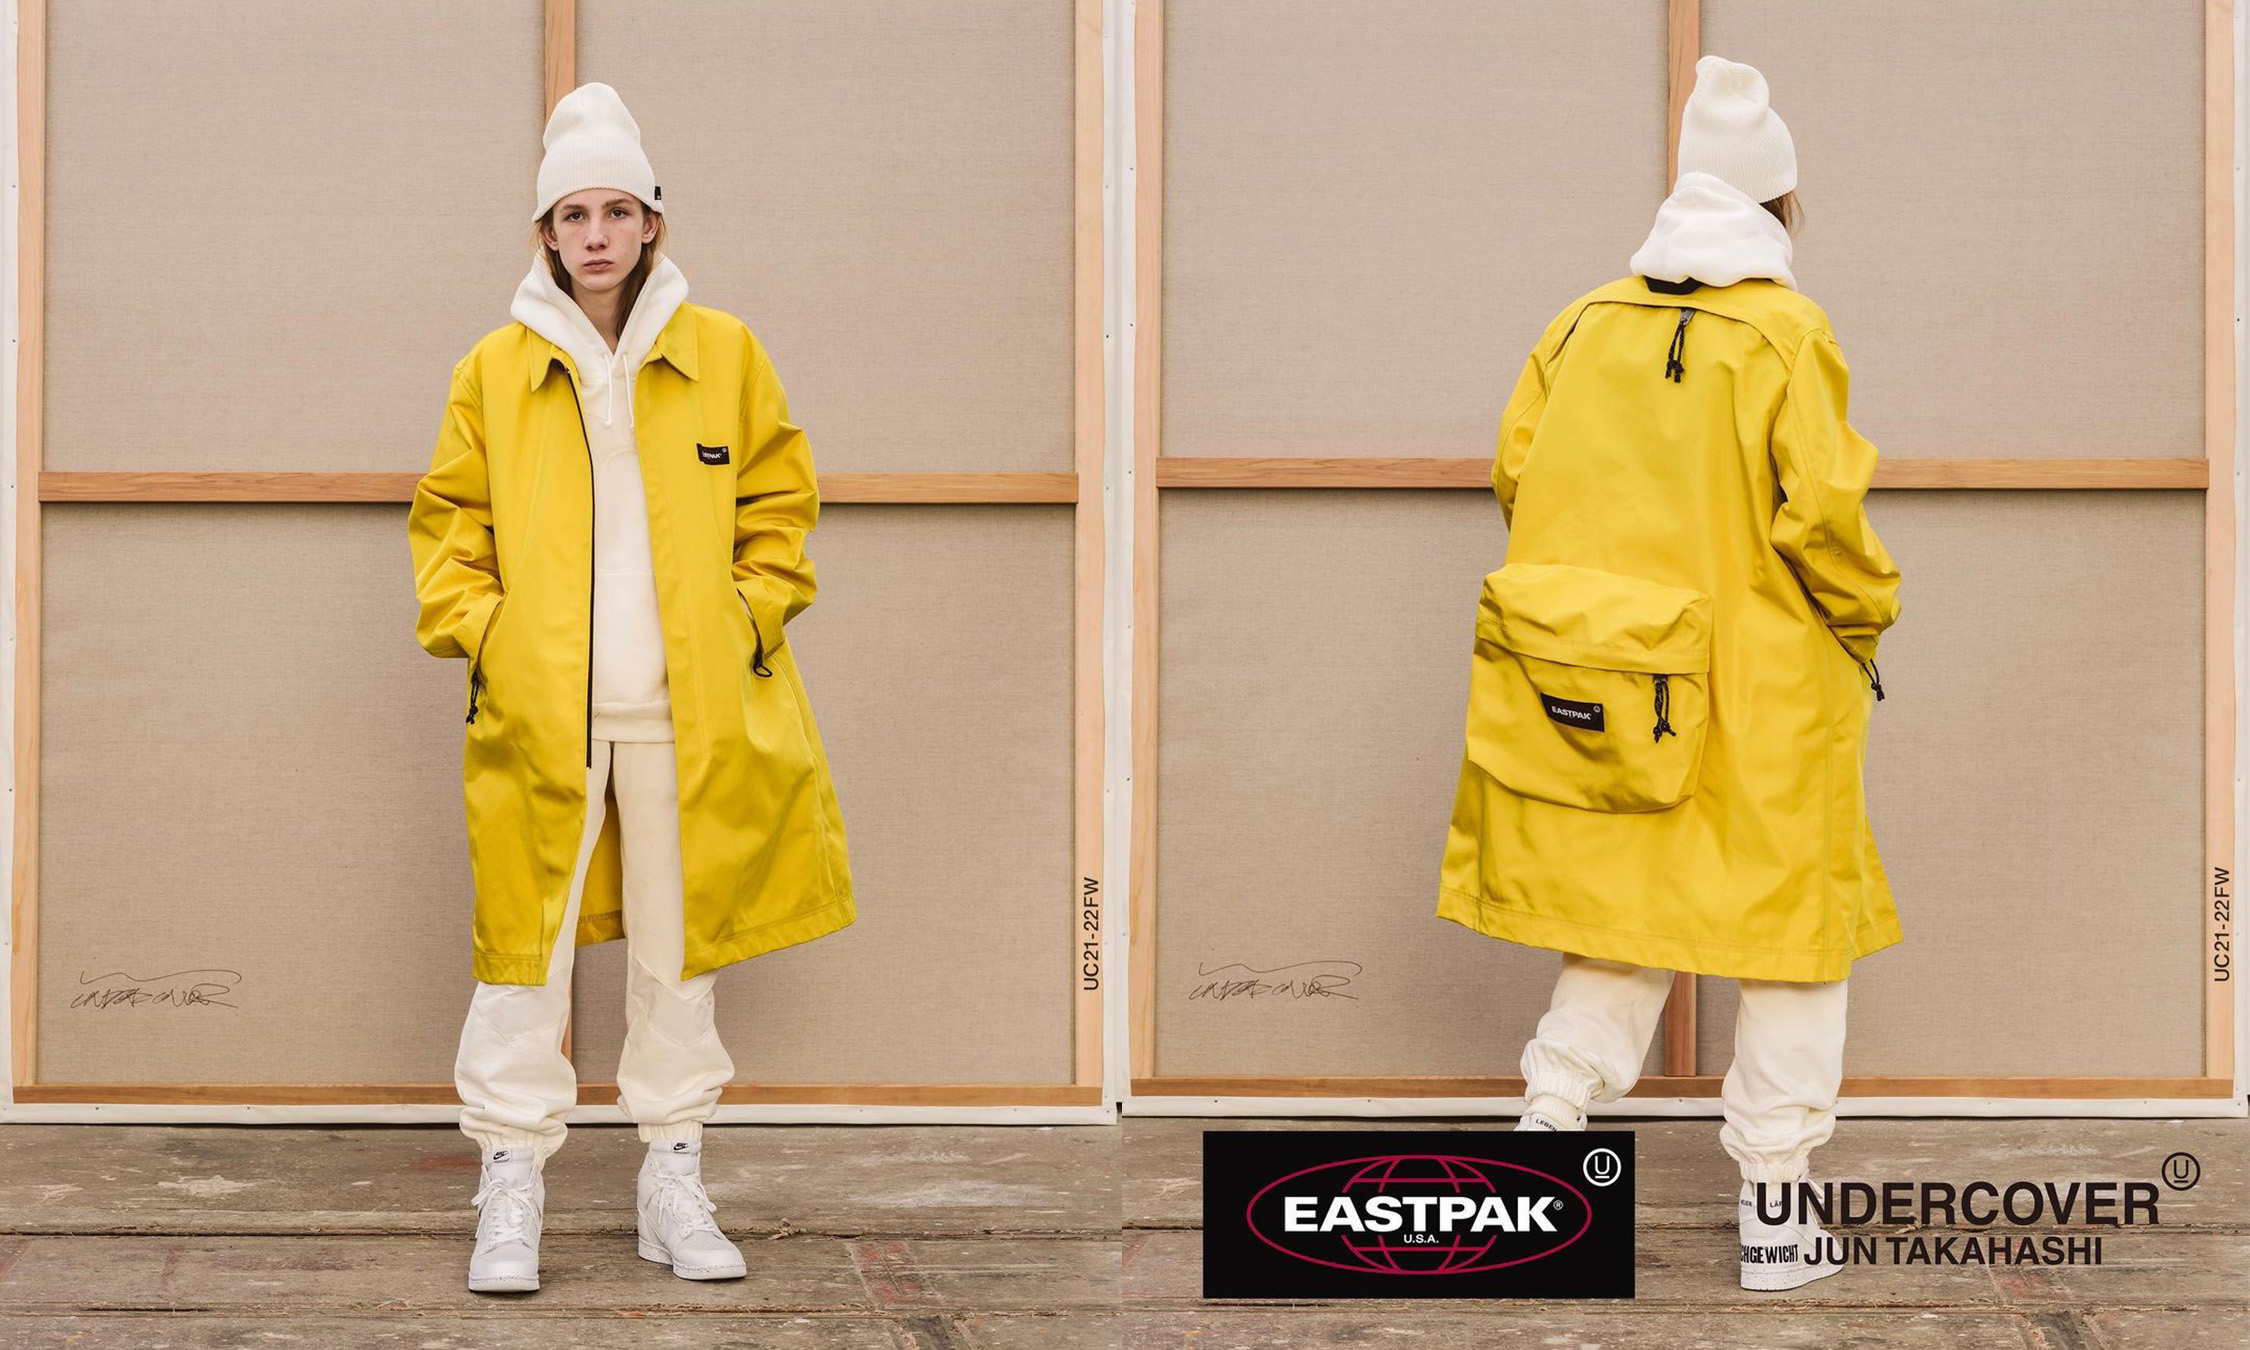 UNDERCOVER x Eastpak 服饰联名系列即将发售